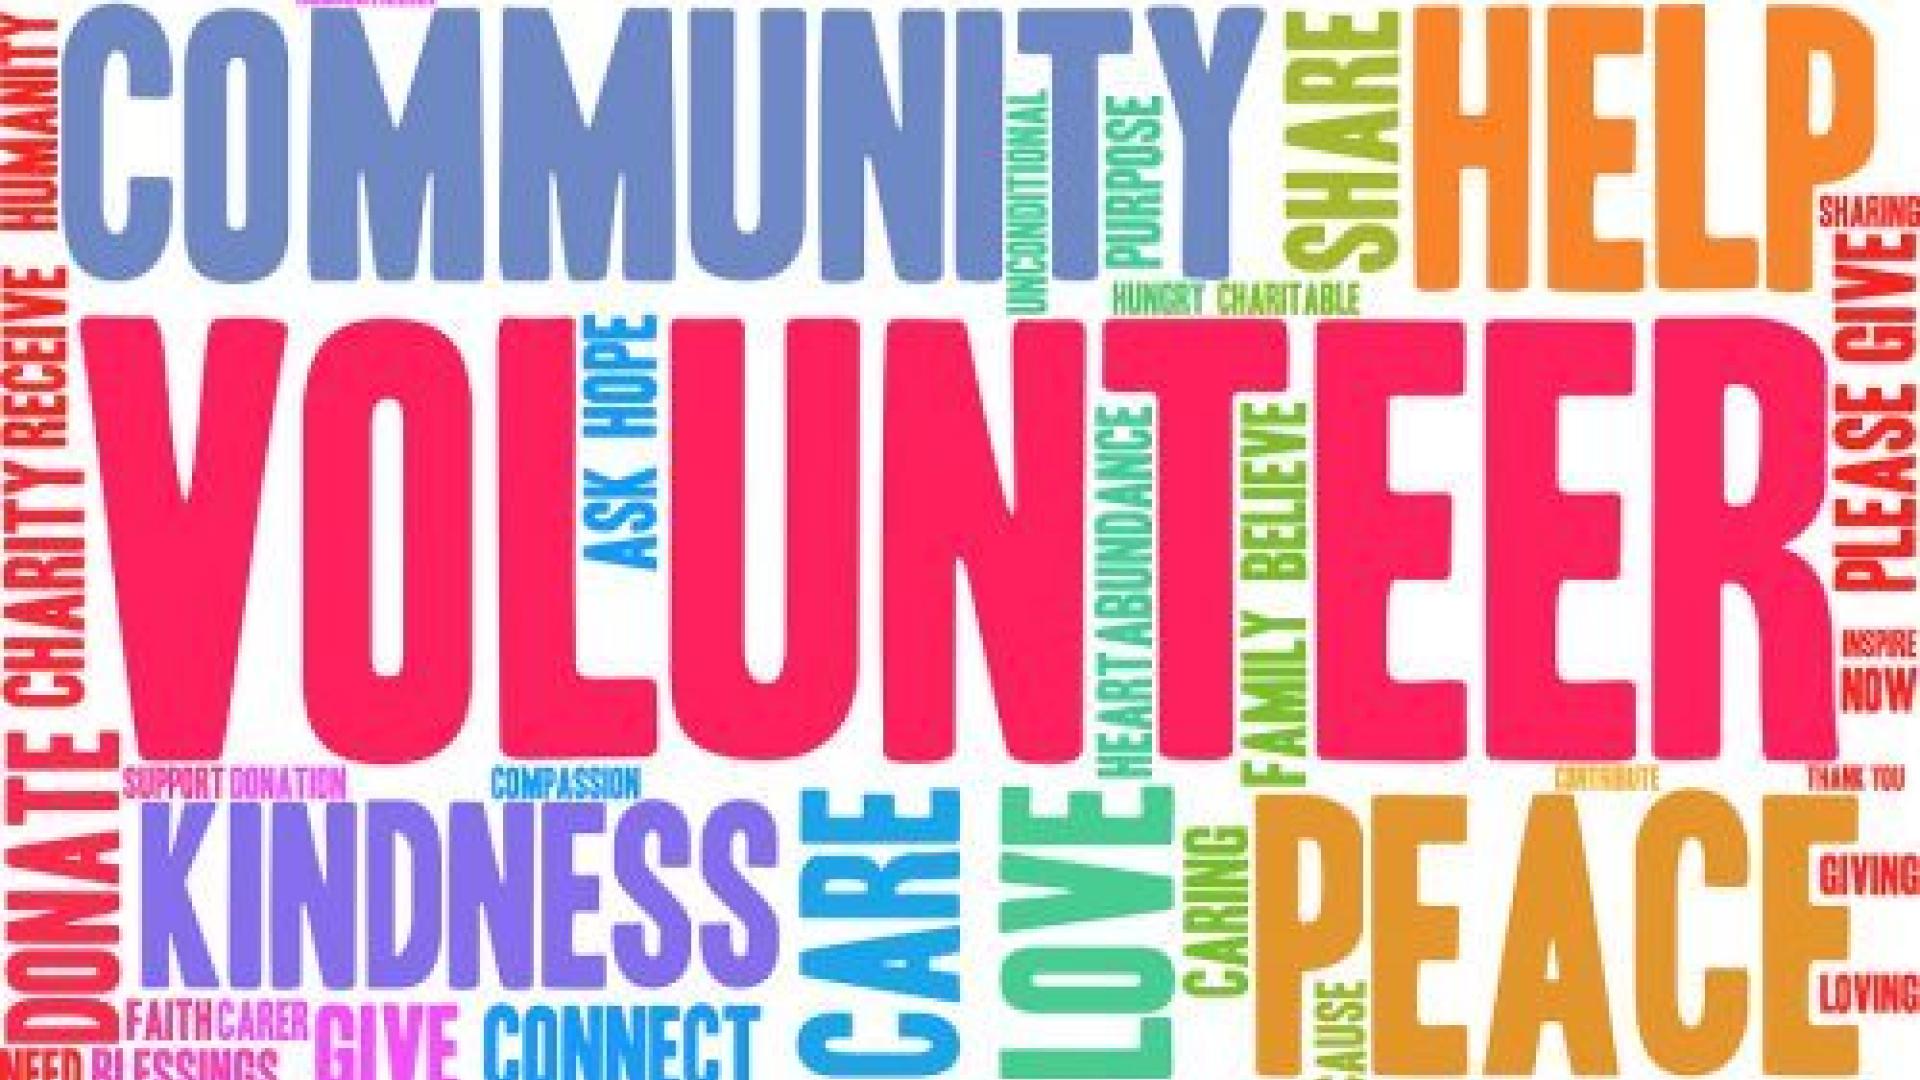 Word cloud collage for community volunteering